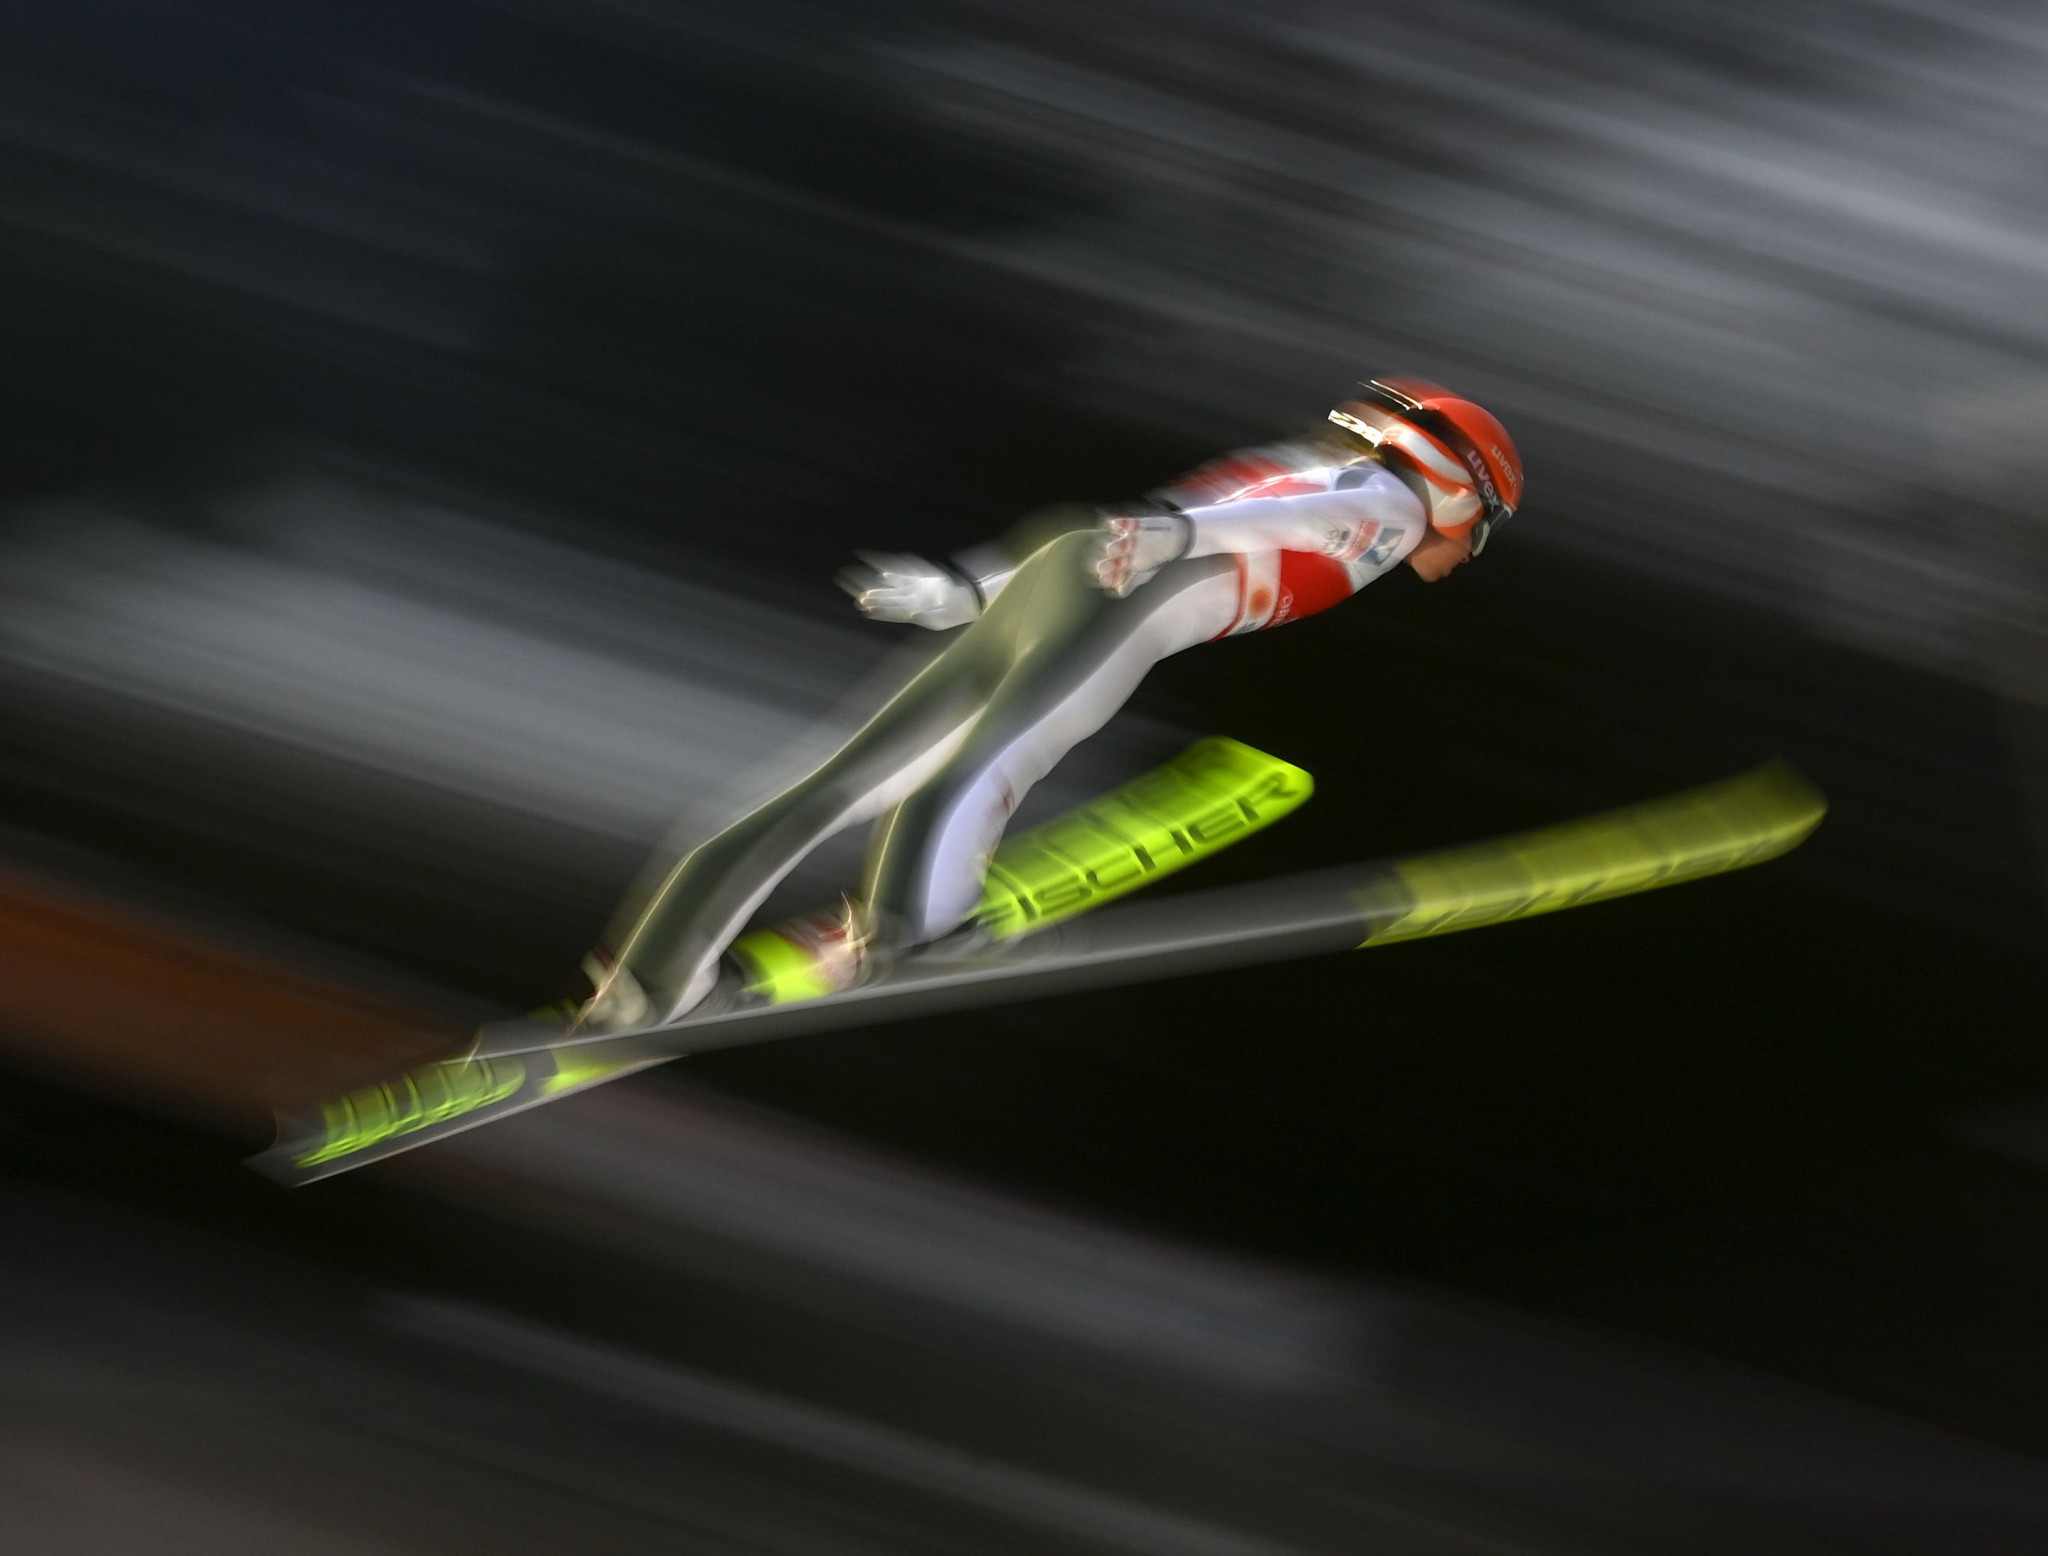 Kramer heads qualification at women's Ski Jumping World Cup in Lillehammer